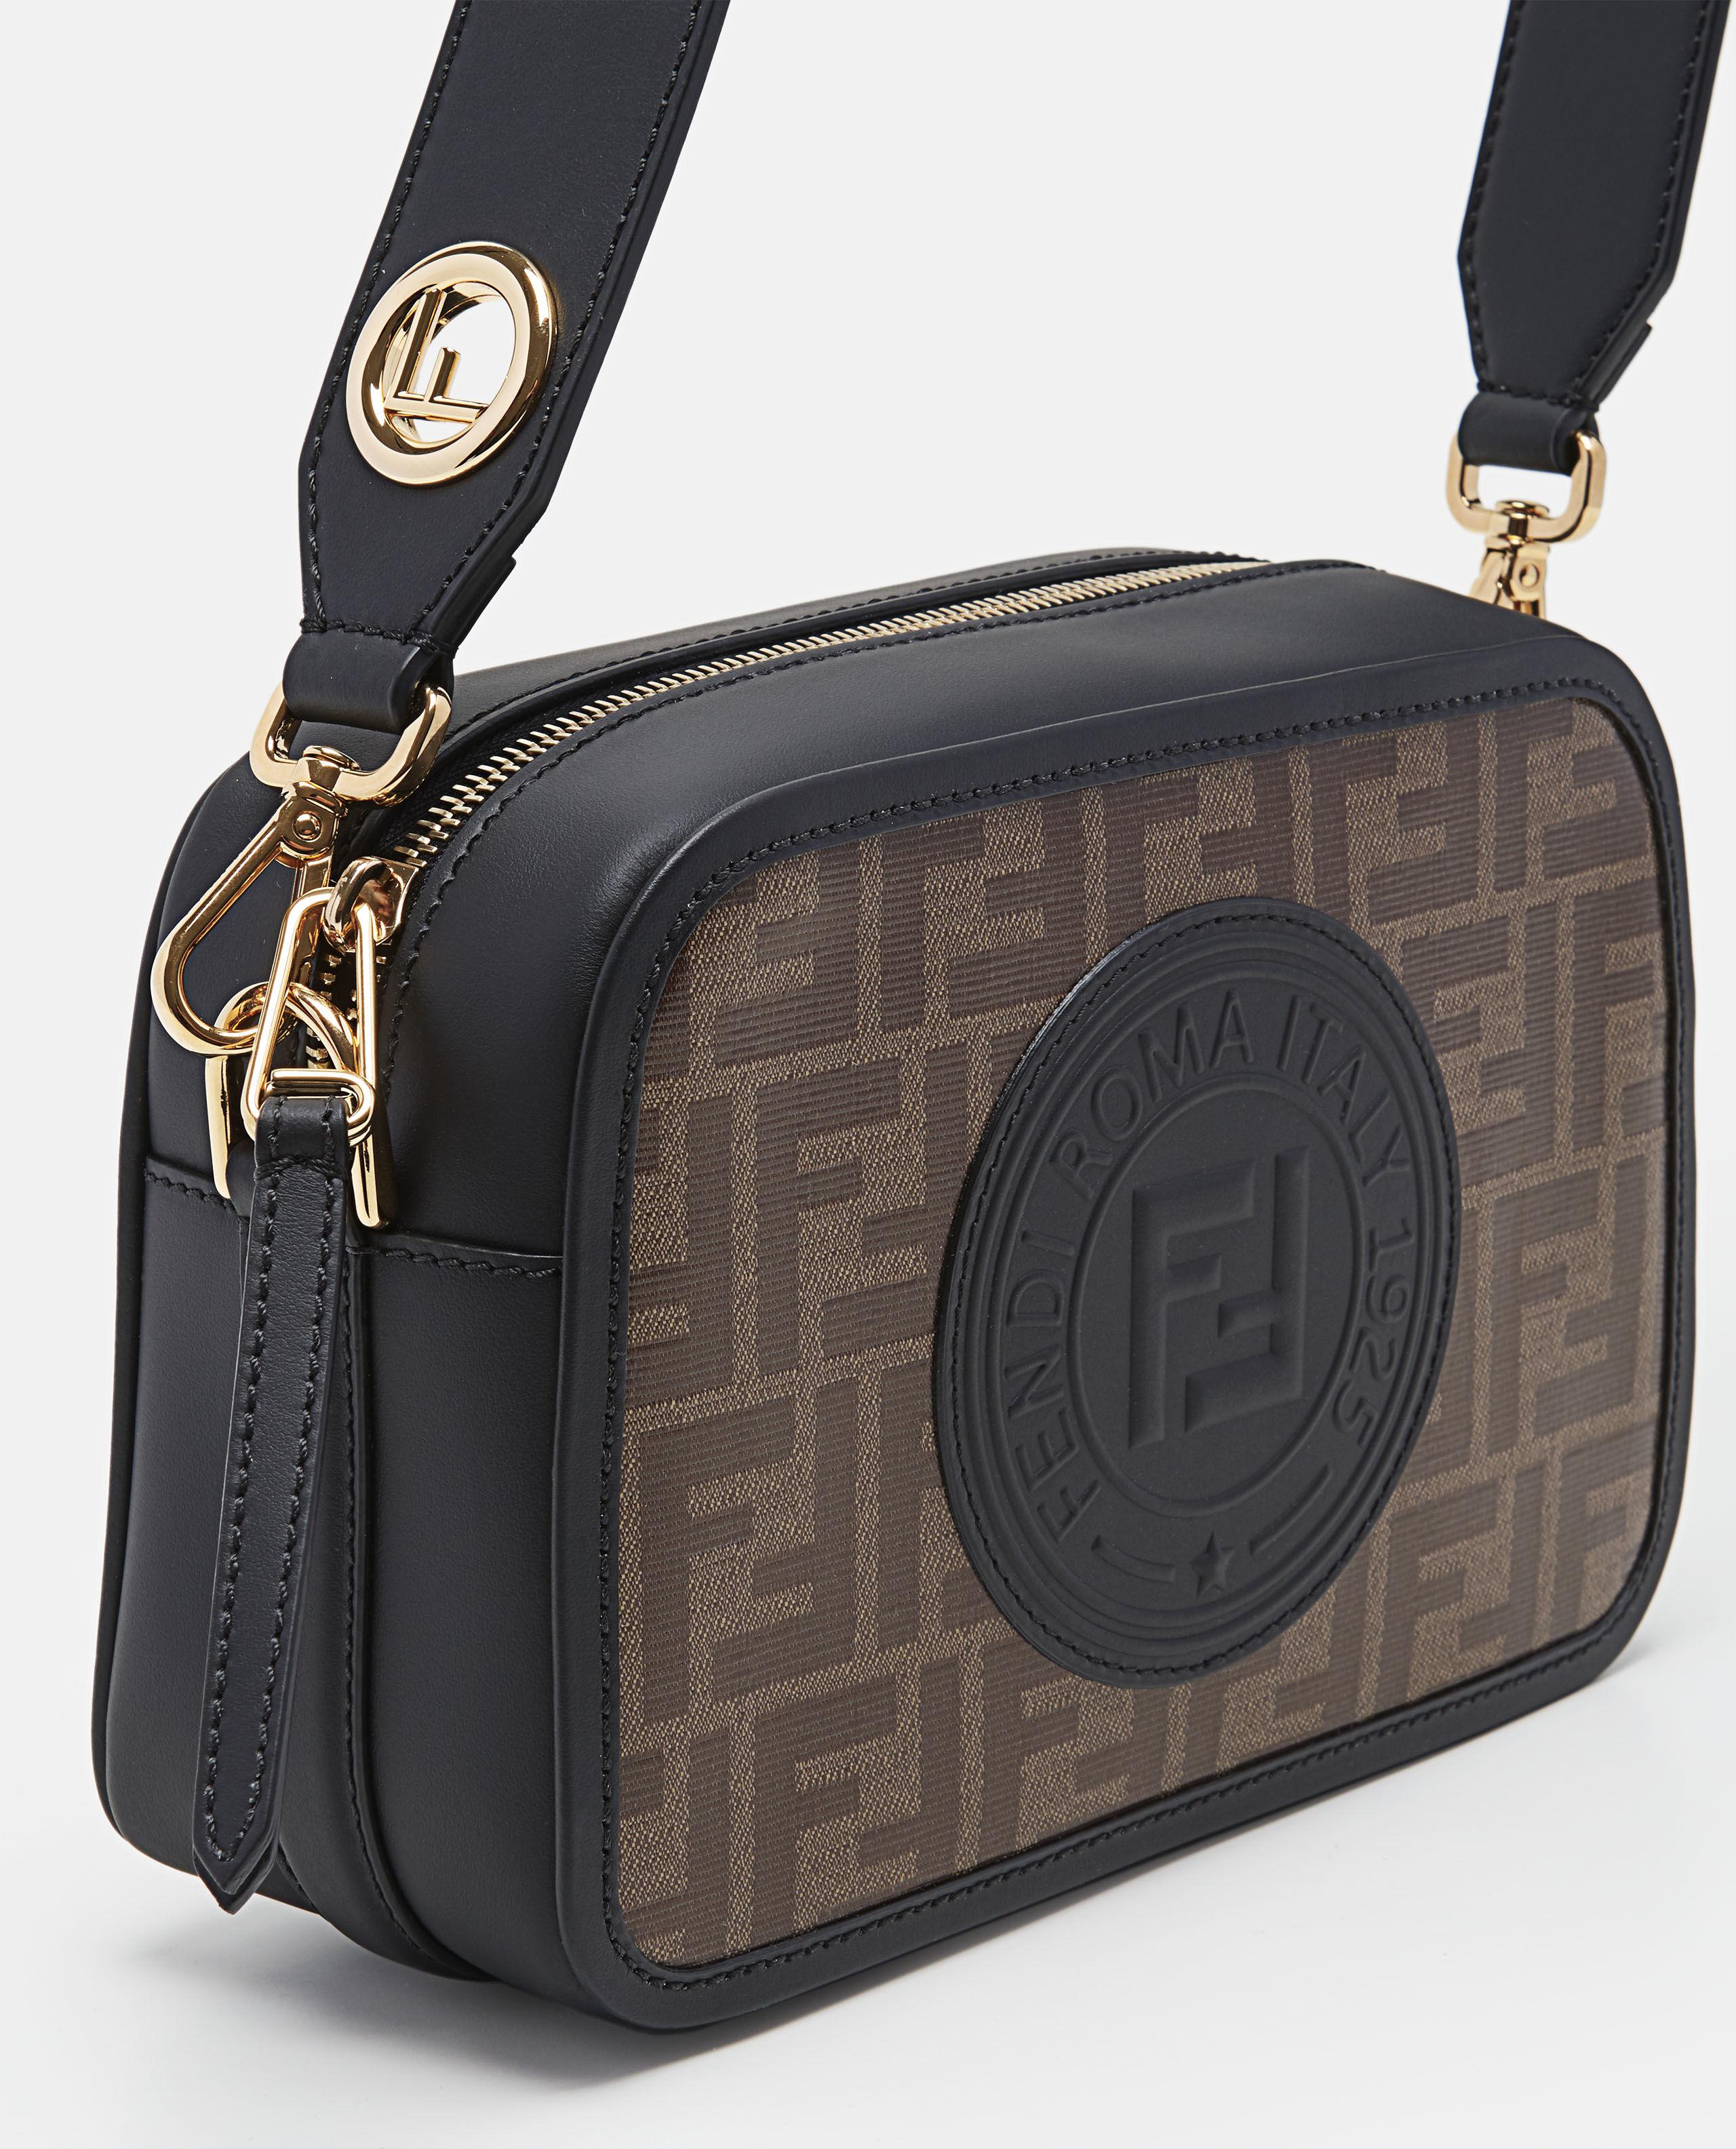 Fendi Leather Camera Case Bag in Black - Lyst